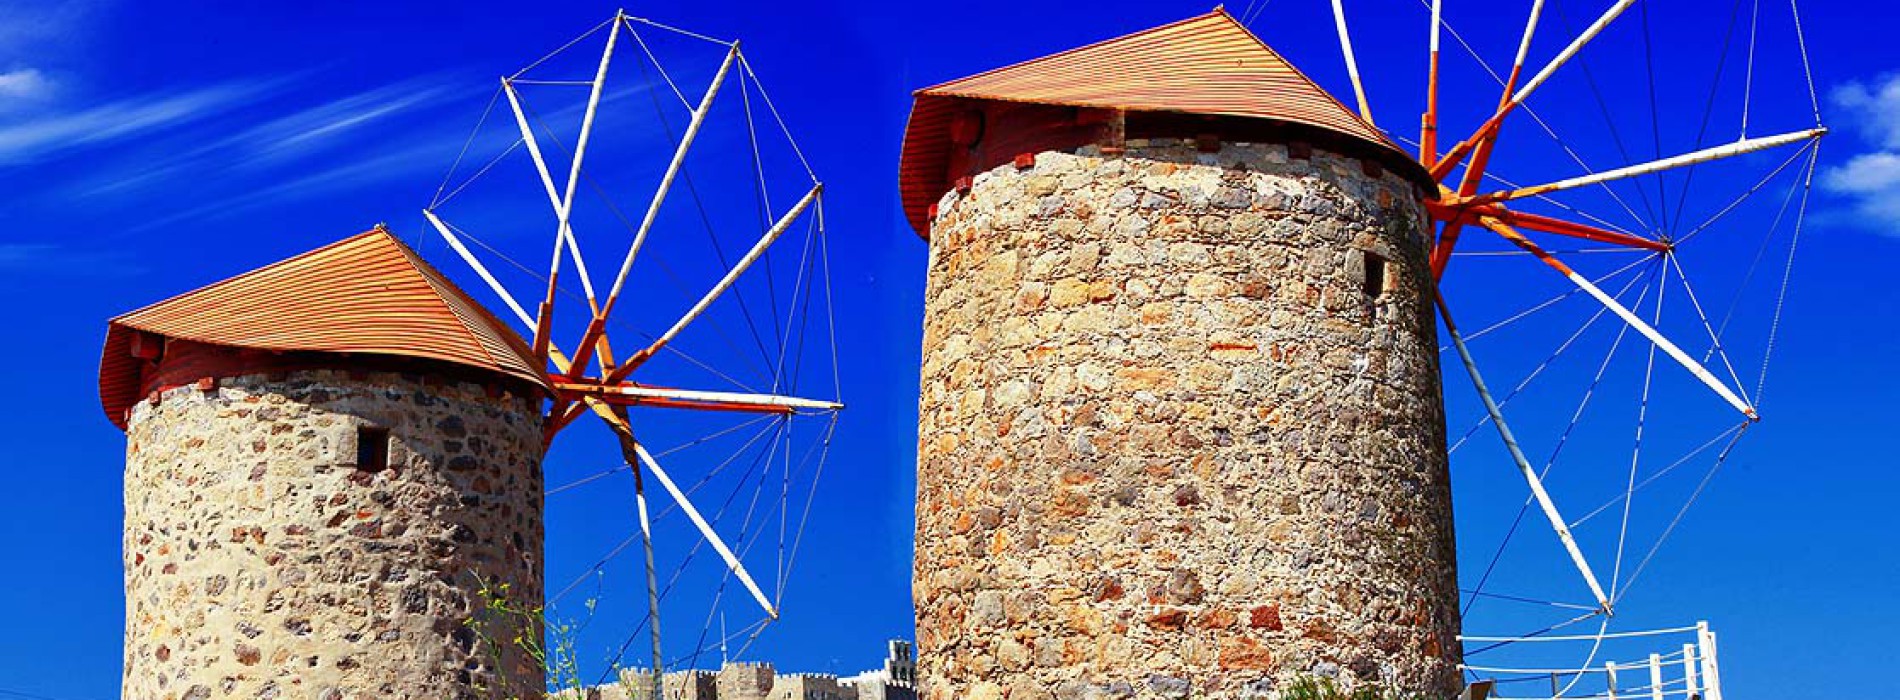 The Windmills of Patmos